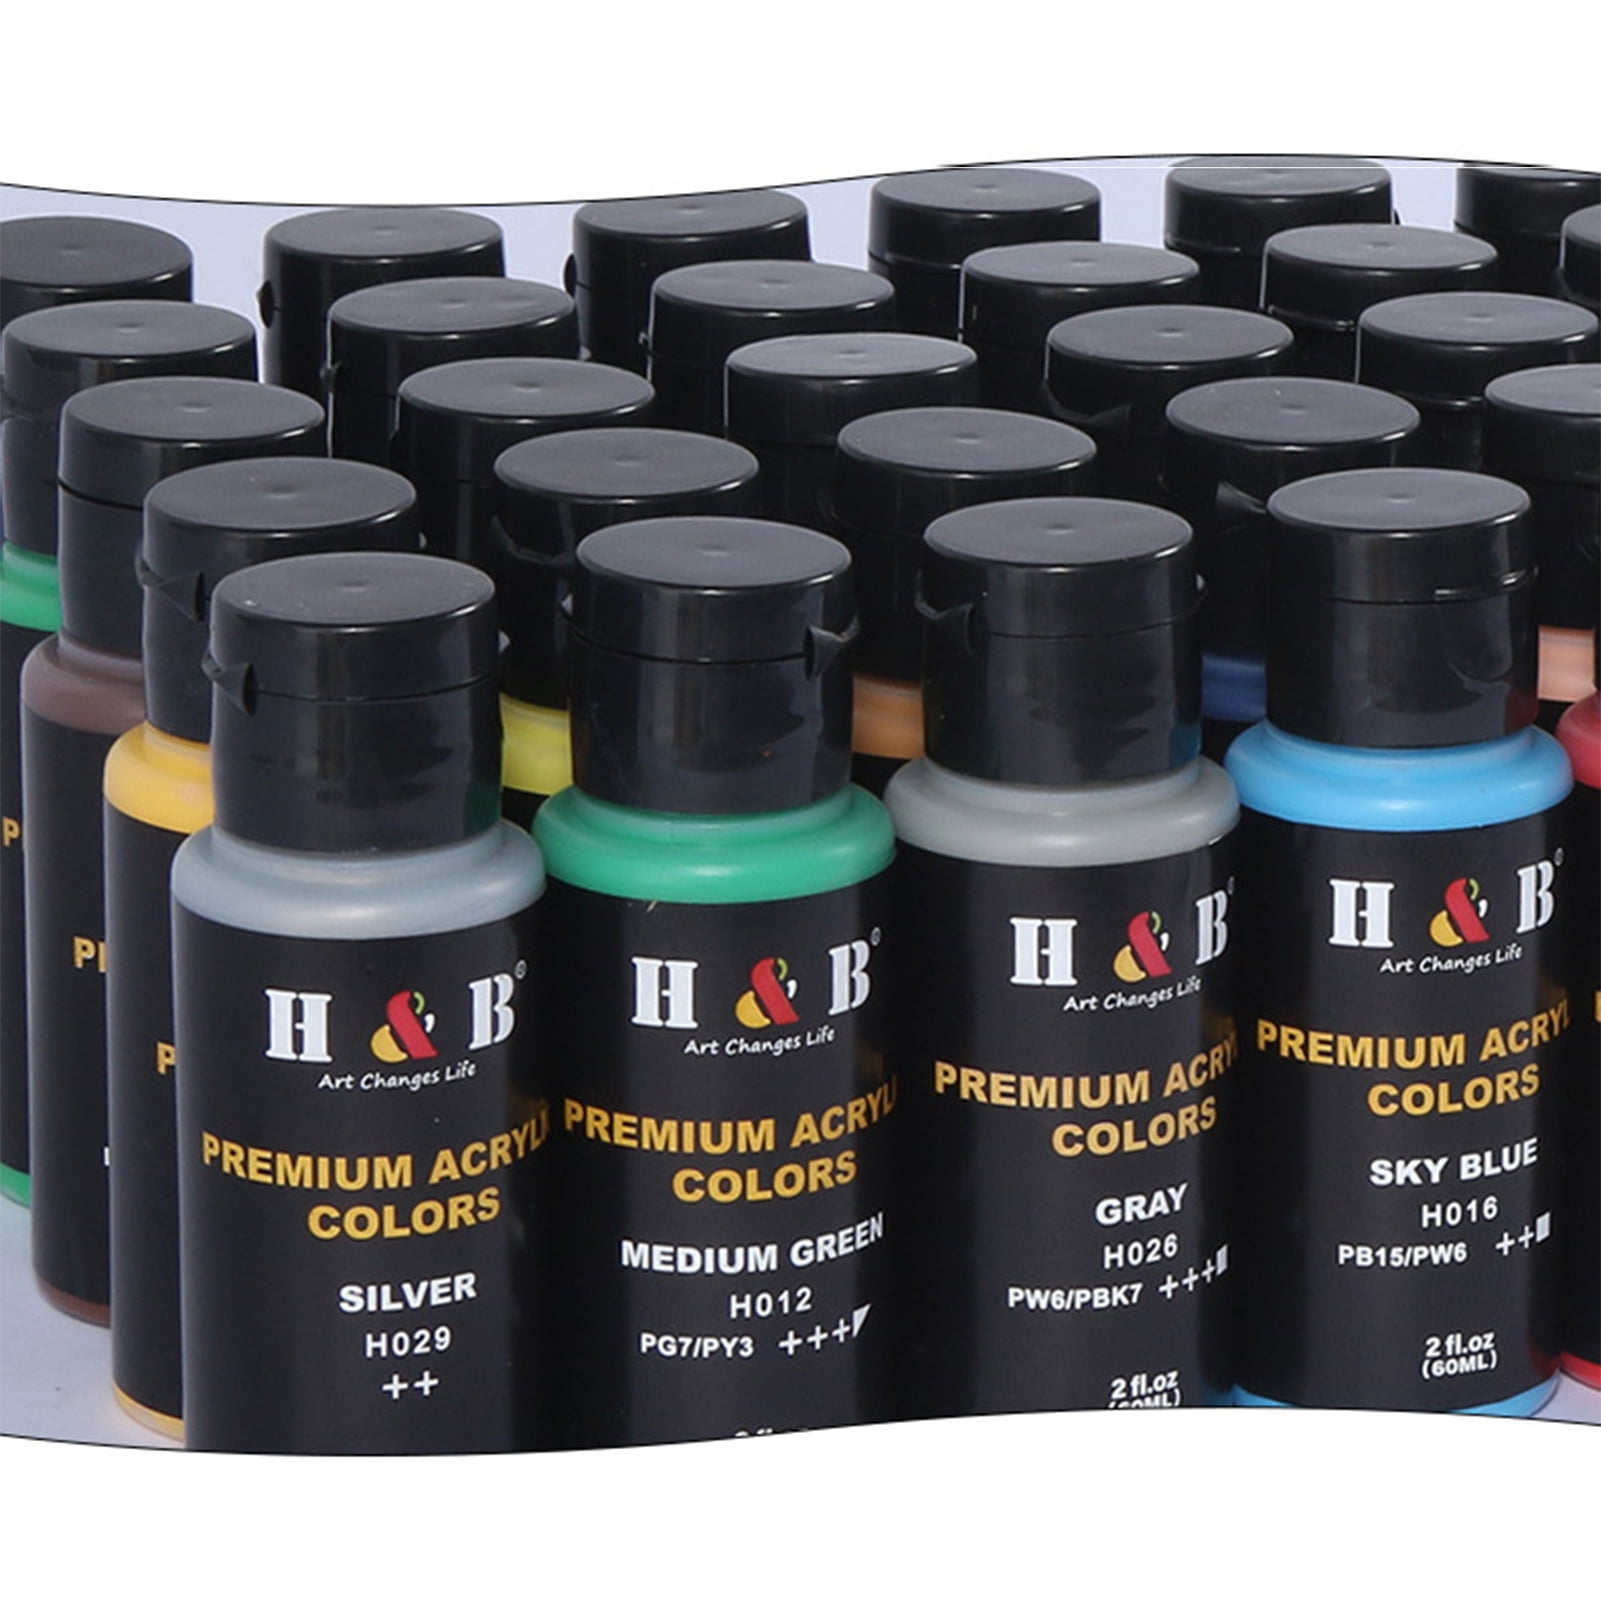 H&B Acrylic Paint Set, 12 Colors (60ml, 2oz) Art Craft Paint Supplies for  Canvas Wood Ceramic Rock Painting, Rich Pigments Non Toxic Paints for Kids  Beginners Students Adults Artist Painter 